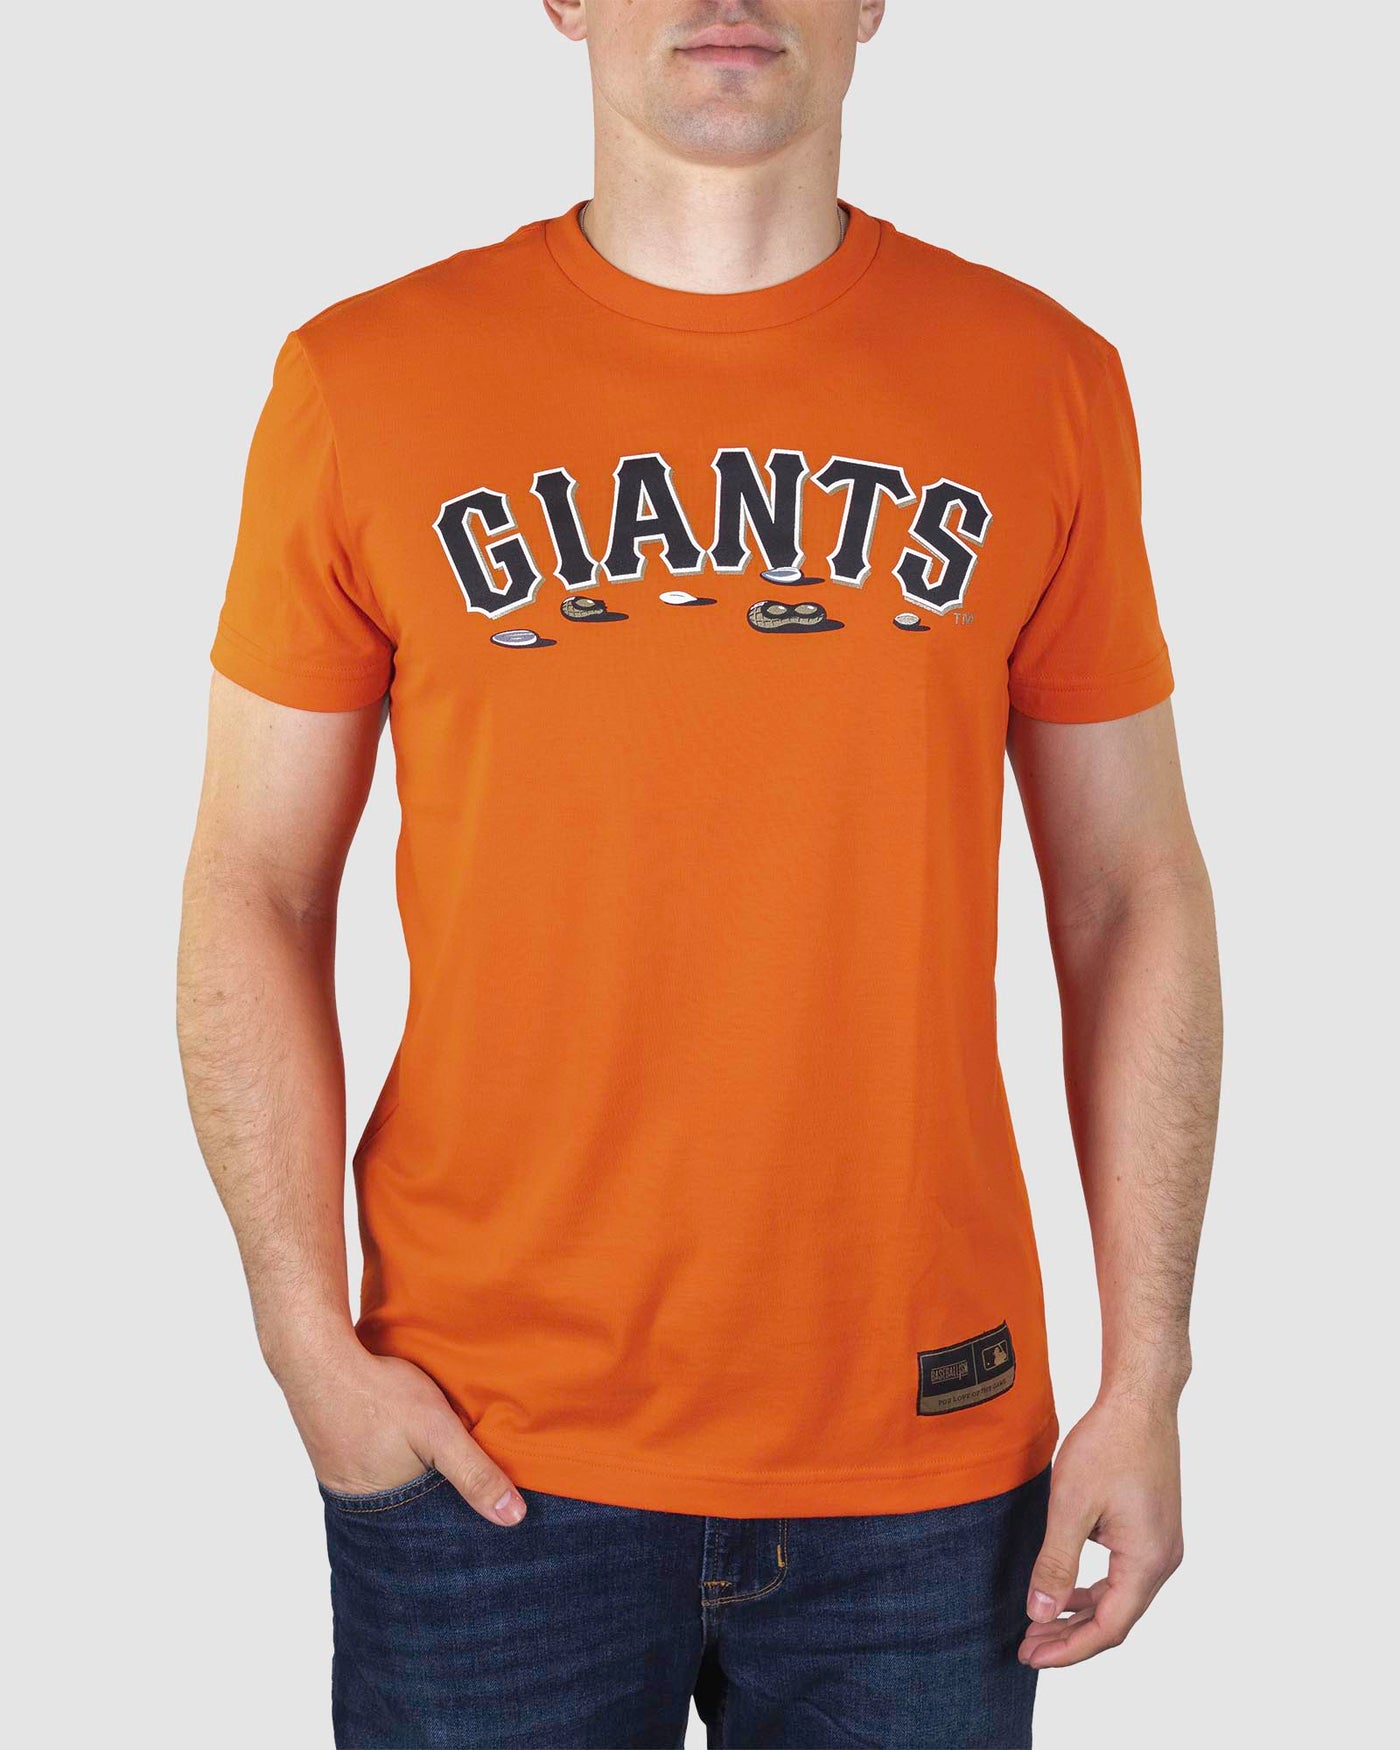 Baseballism Get Your Peanuts! - San Francisco Giants Small